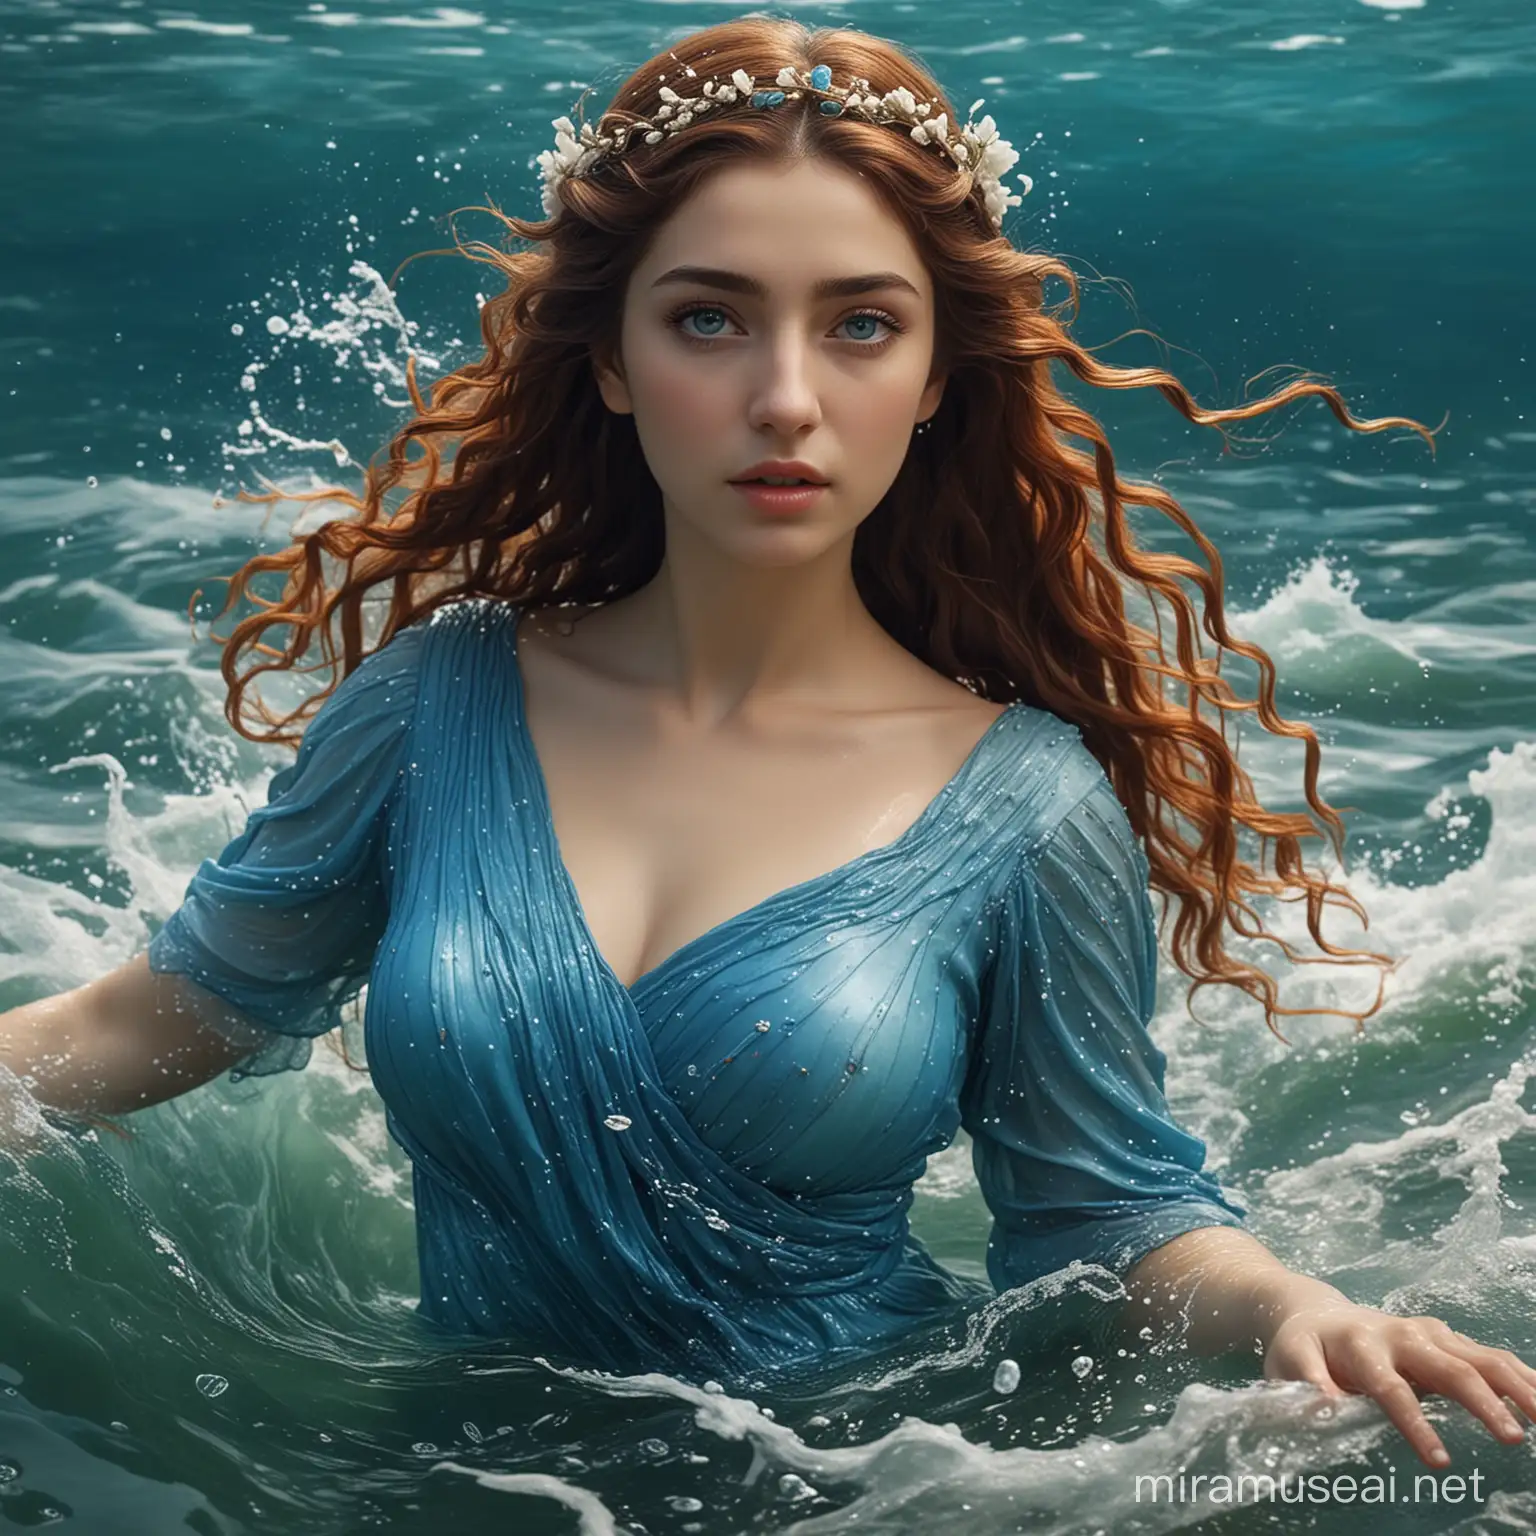 Kimiya Hosseini Portrays Leucothea Greek Goddess of the Sea in Ethereal Blue Dress